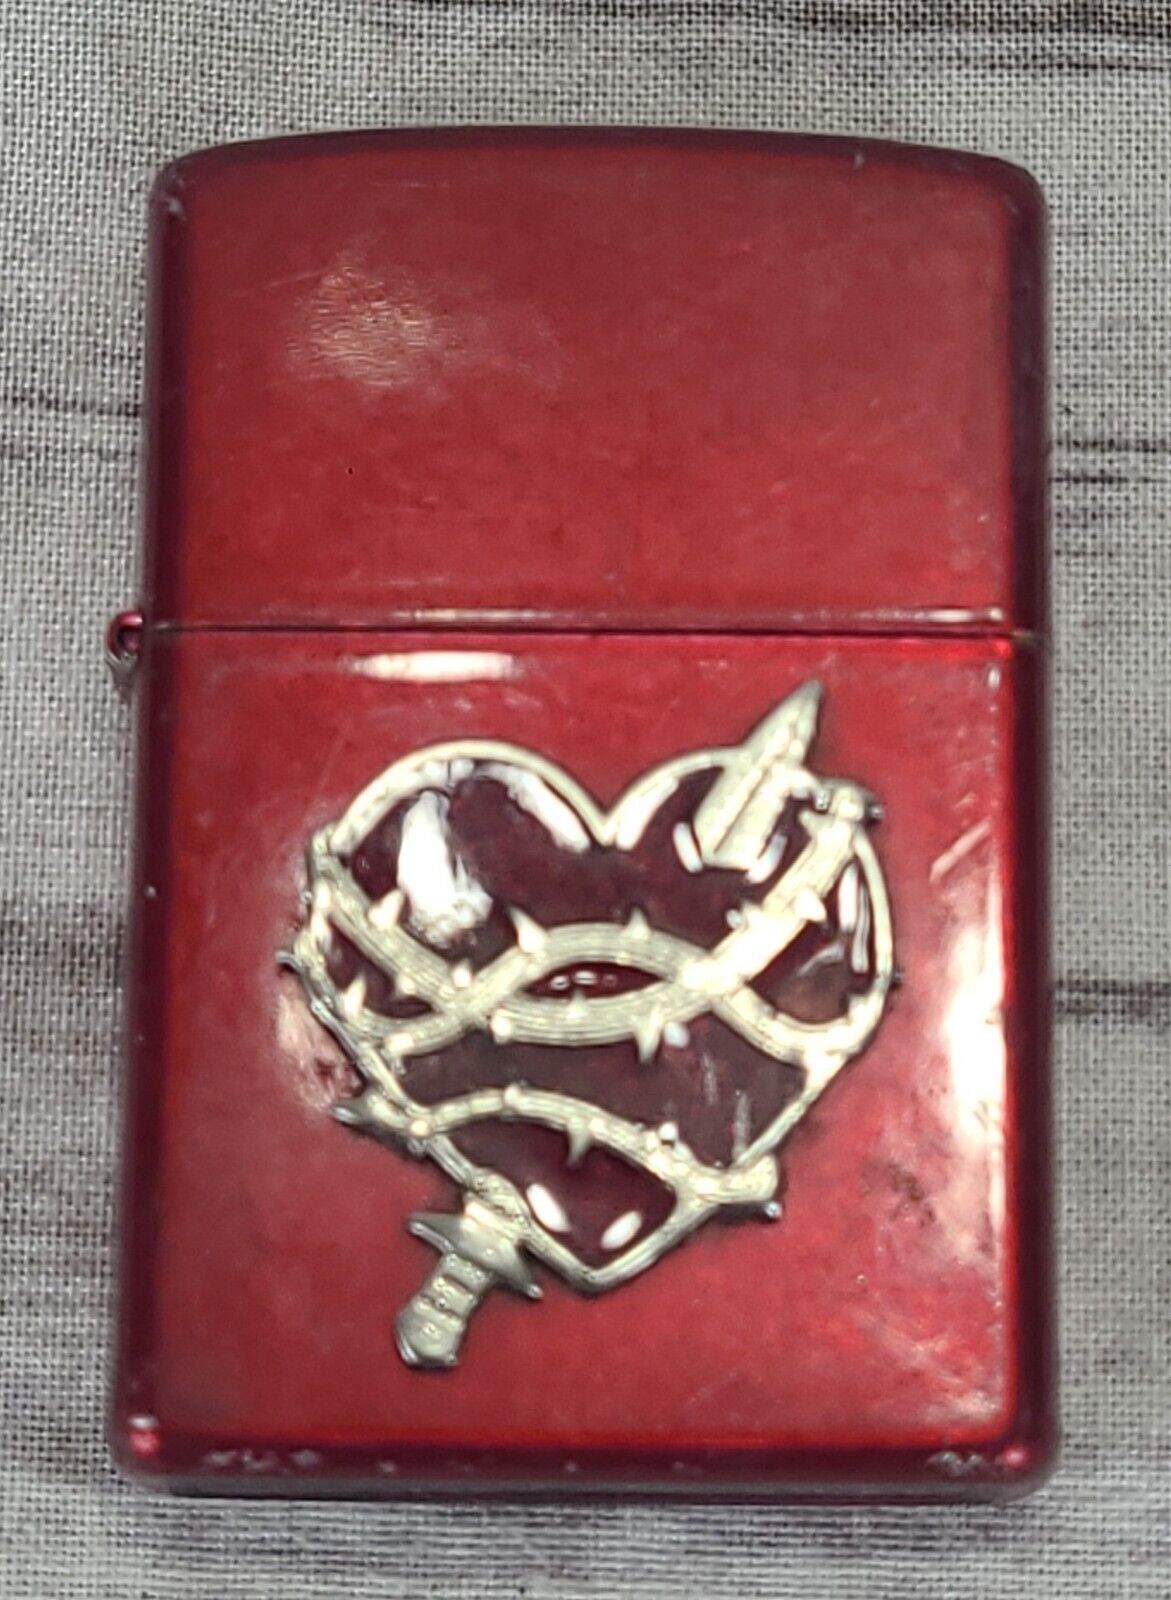 RARE Vintage 2007 Zippo Lighter Candy Apple Red Heart Attack Emblem